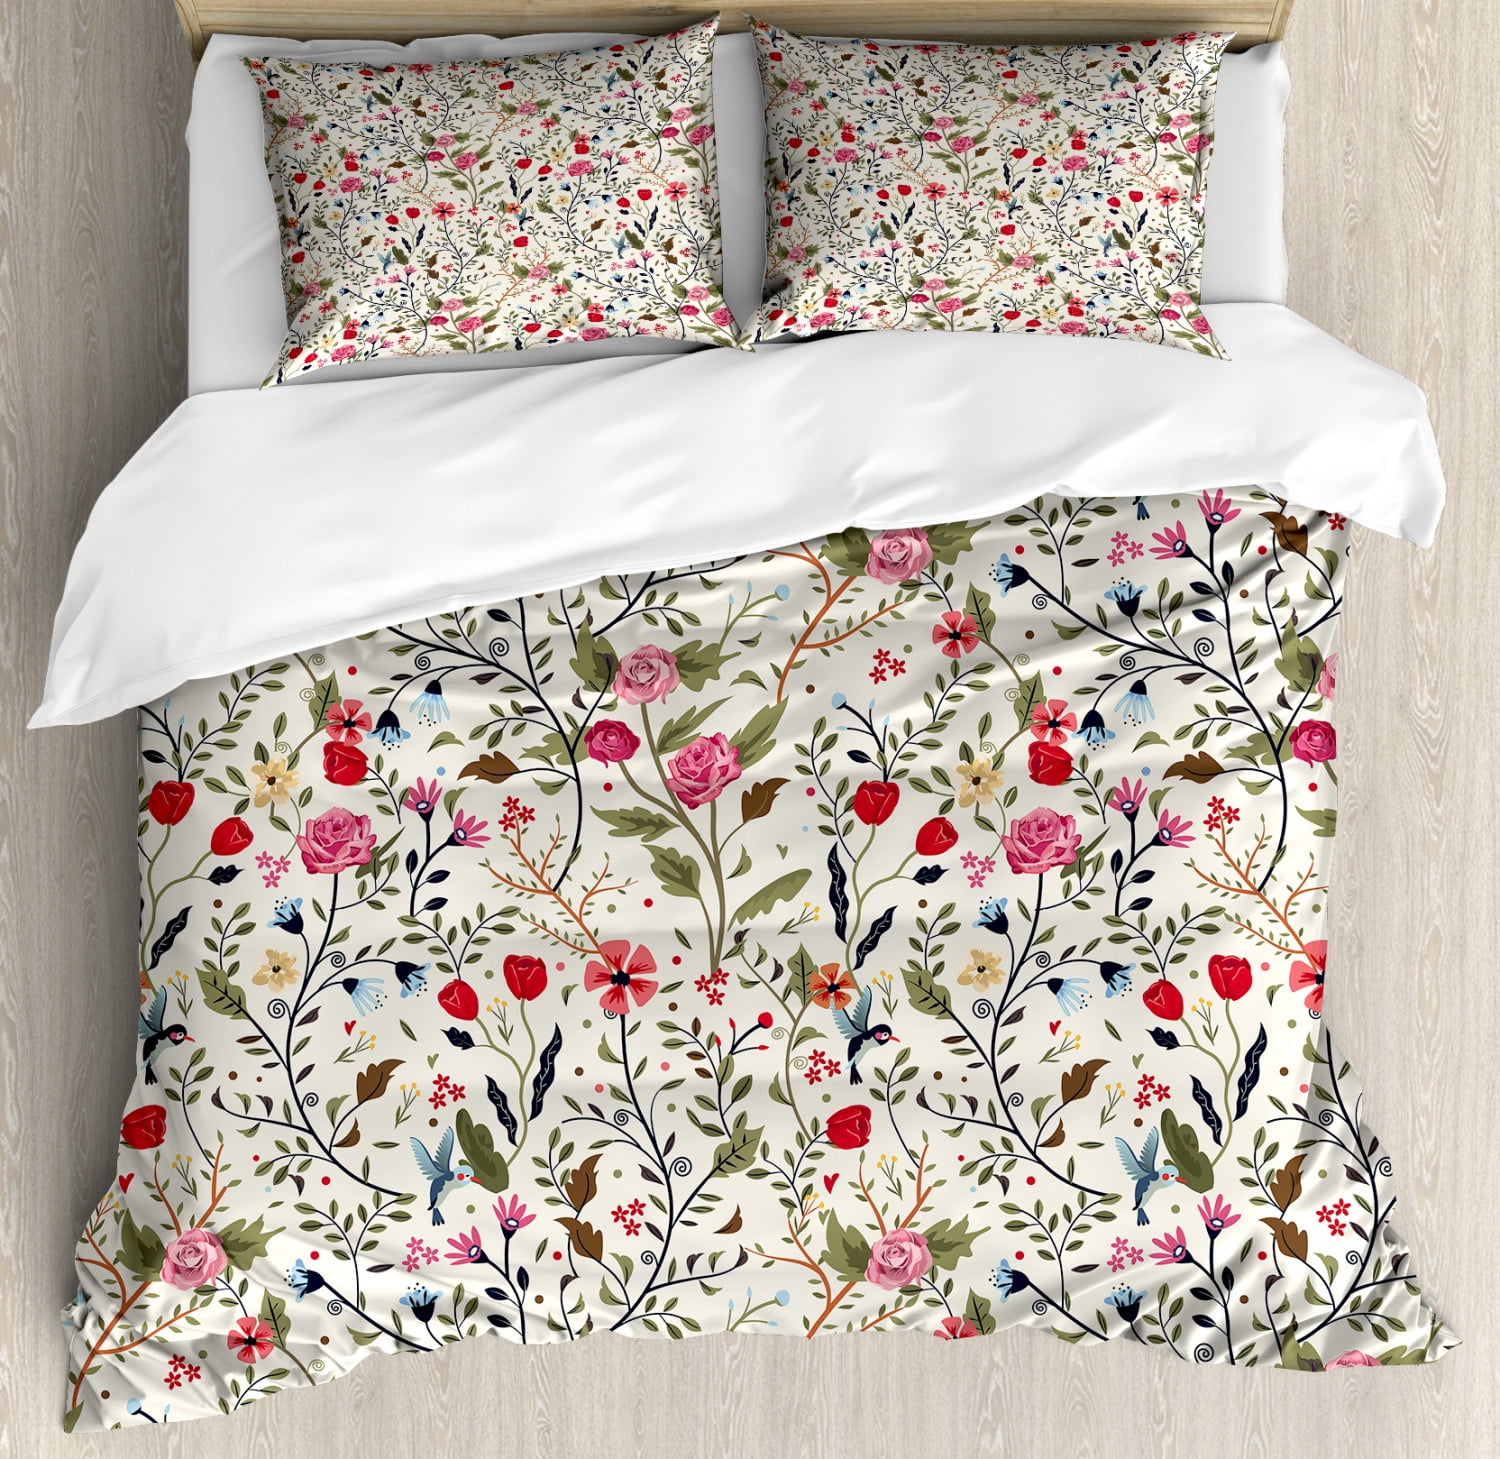 Colorful Butterflies Printed Deer Patterns 4 Pieces Brandream Bedding Floral Duvet Cover Set Queen Size 100% Cotton